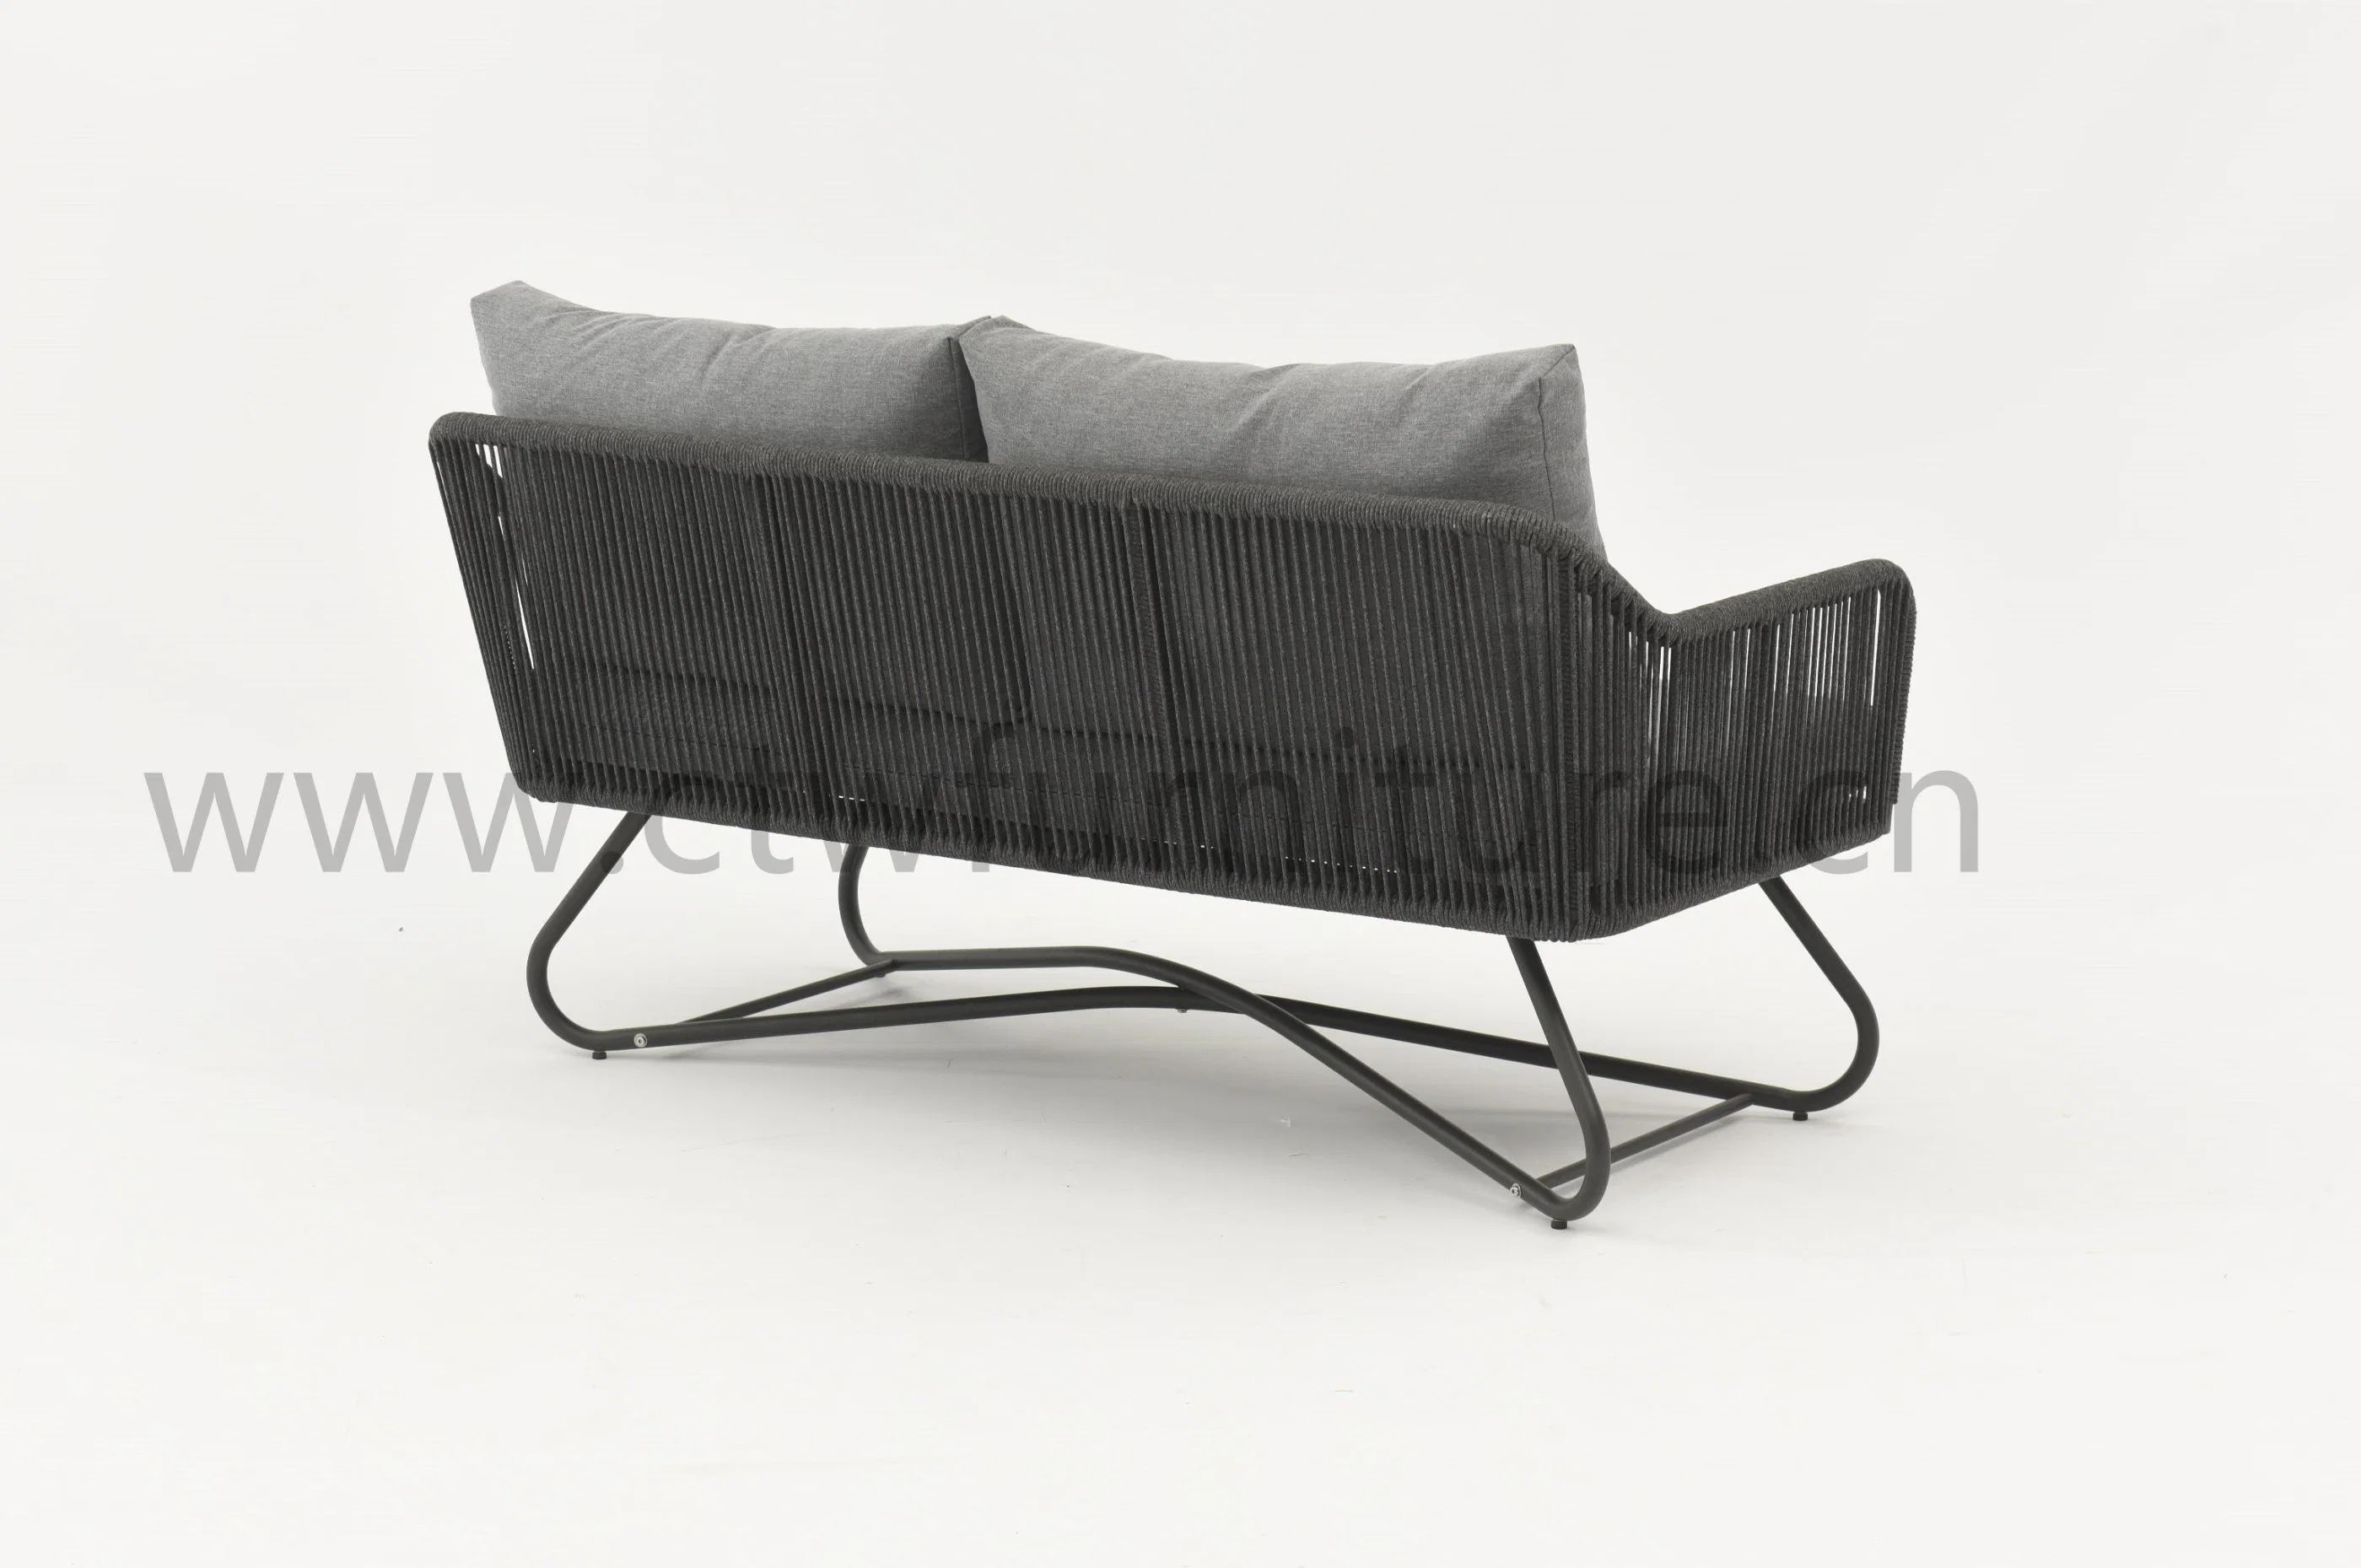 Home Project Hotel Use Furniture Outdoor Aluminium Waterproof Sofa Set Cadeira